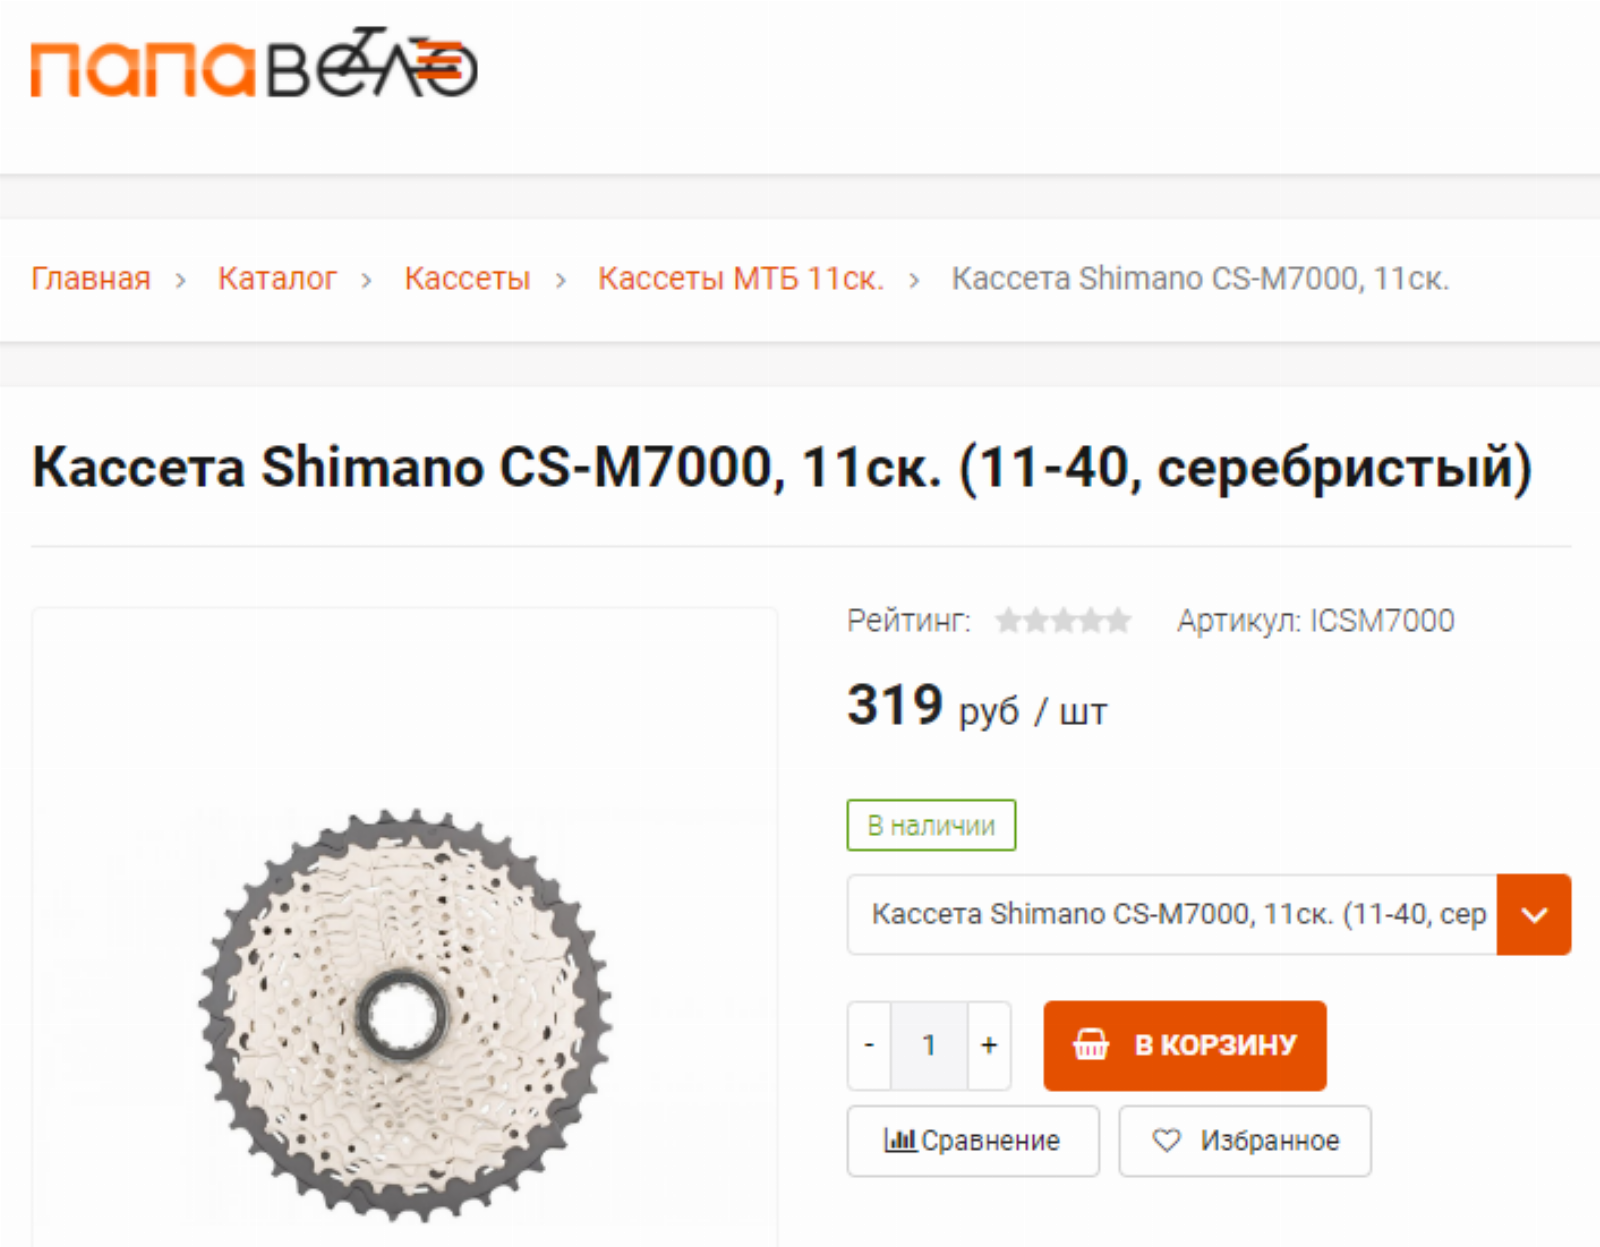 Кассета Shimano CS-M7000, 11ск. (11-40)